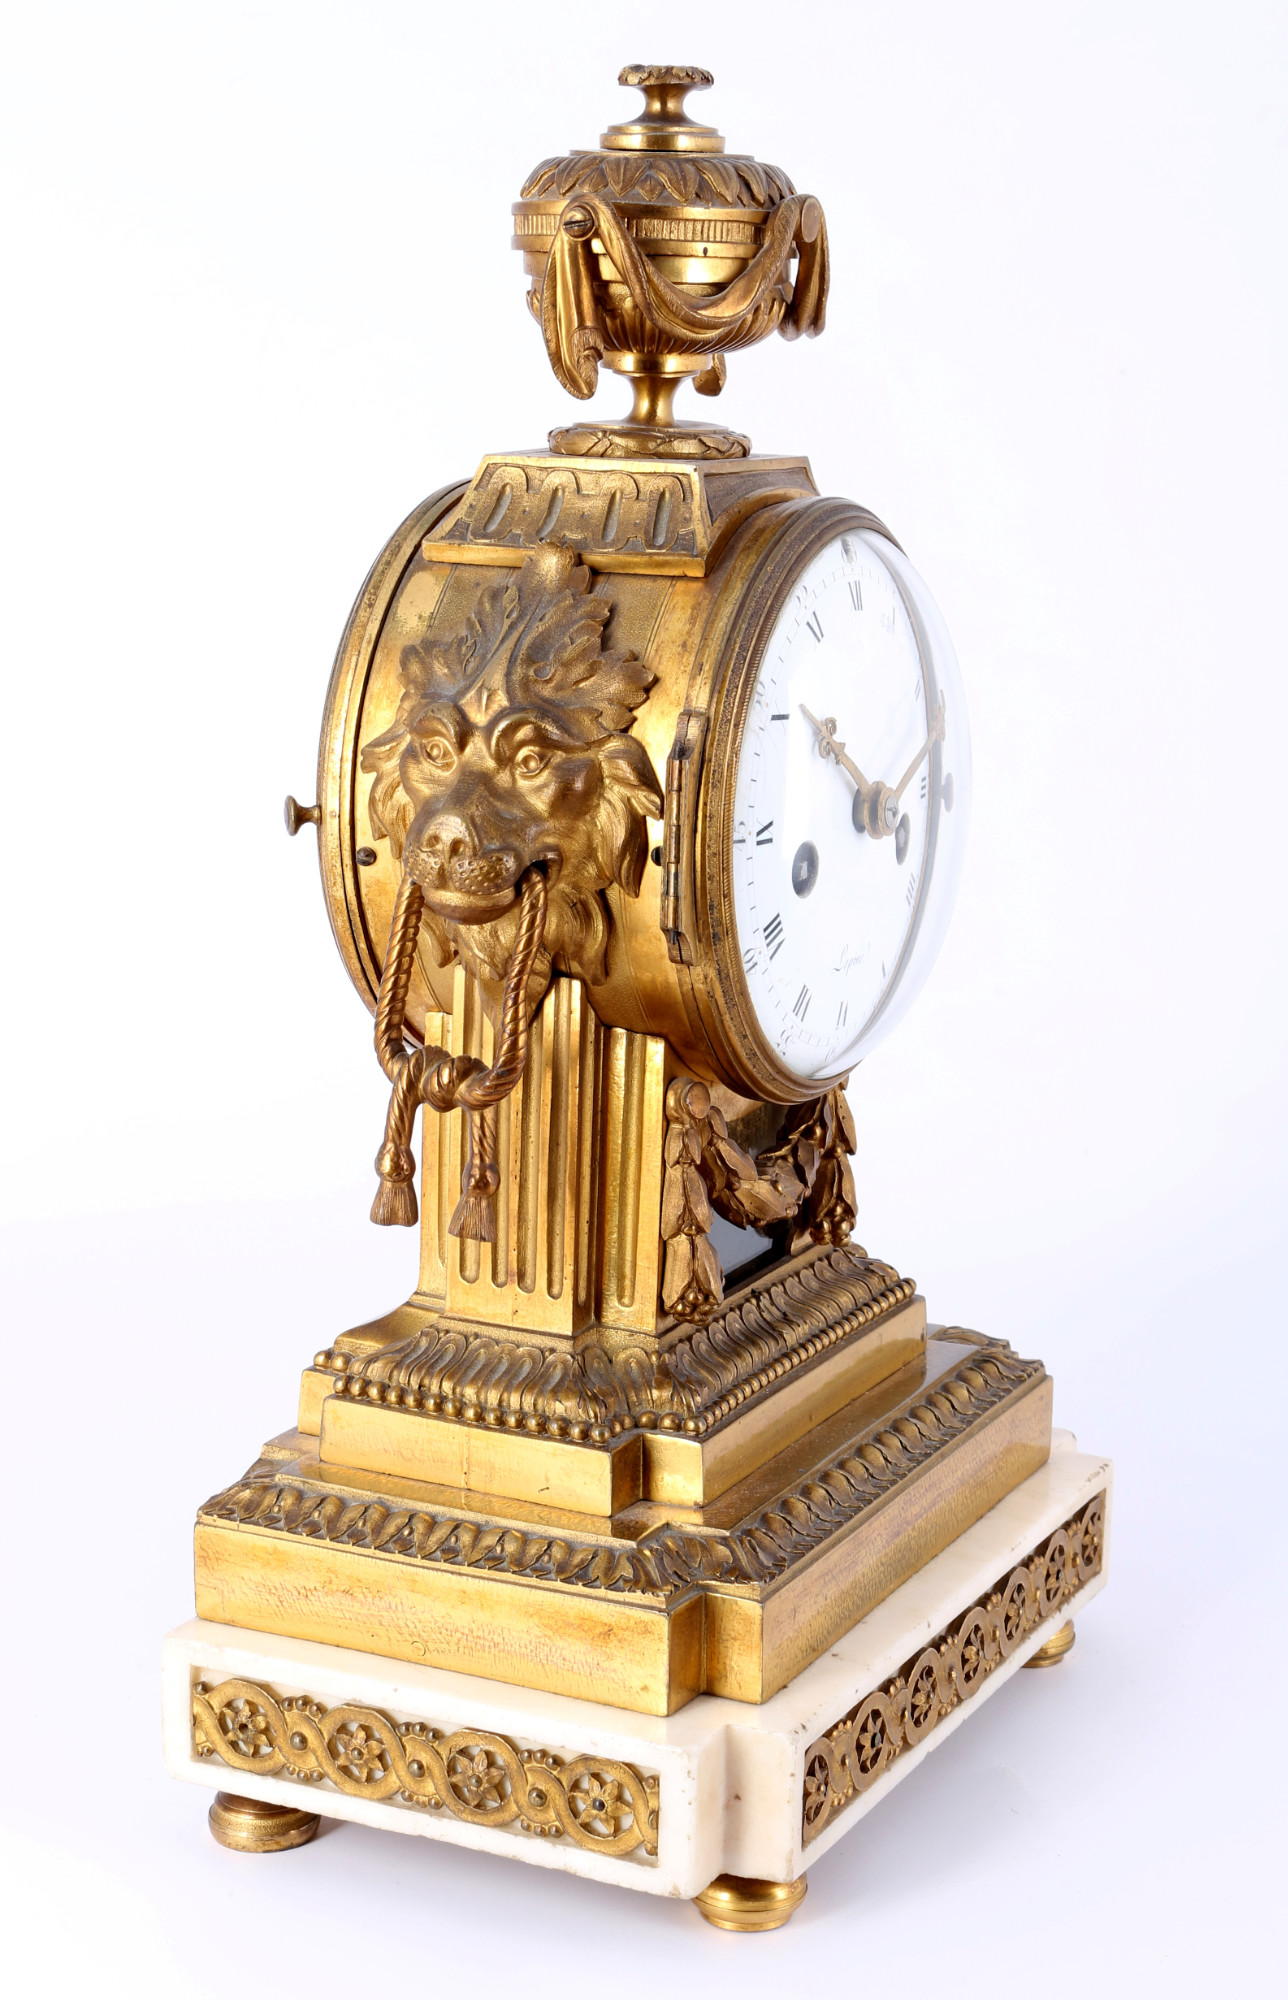 French mantel clock 18th century, Kaminuhr, Frankreich 18. Jahrhundert, - Image 4 of 7